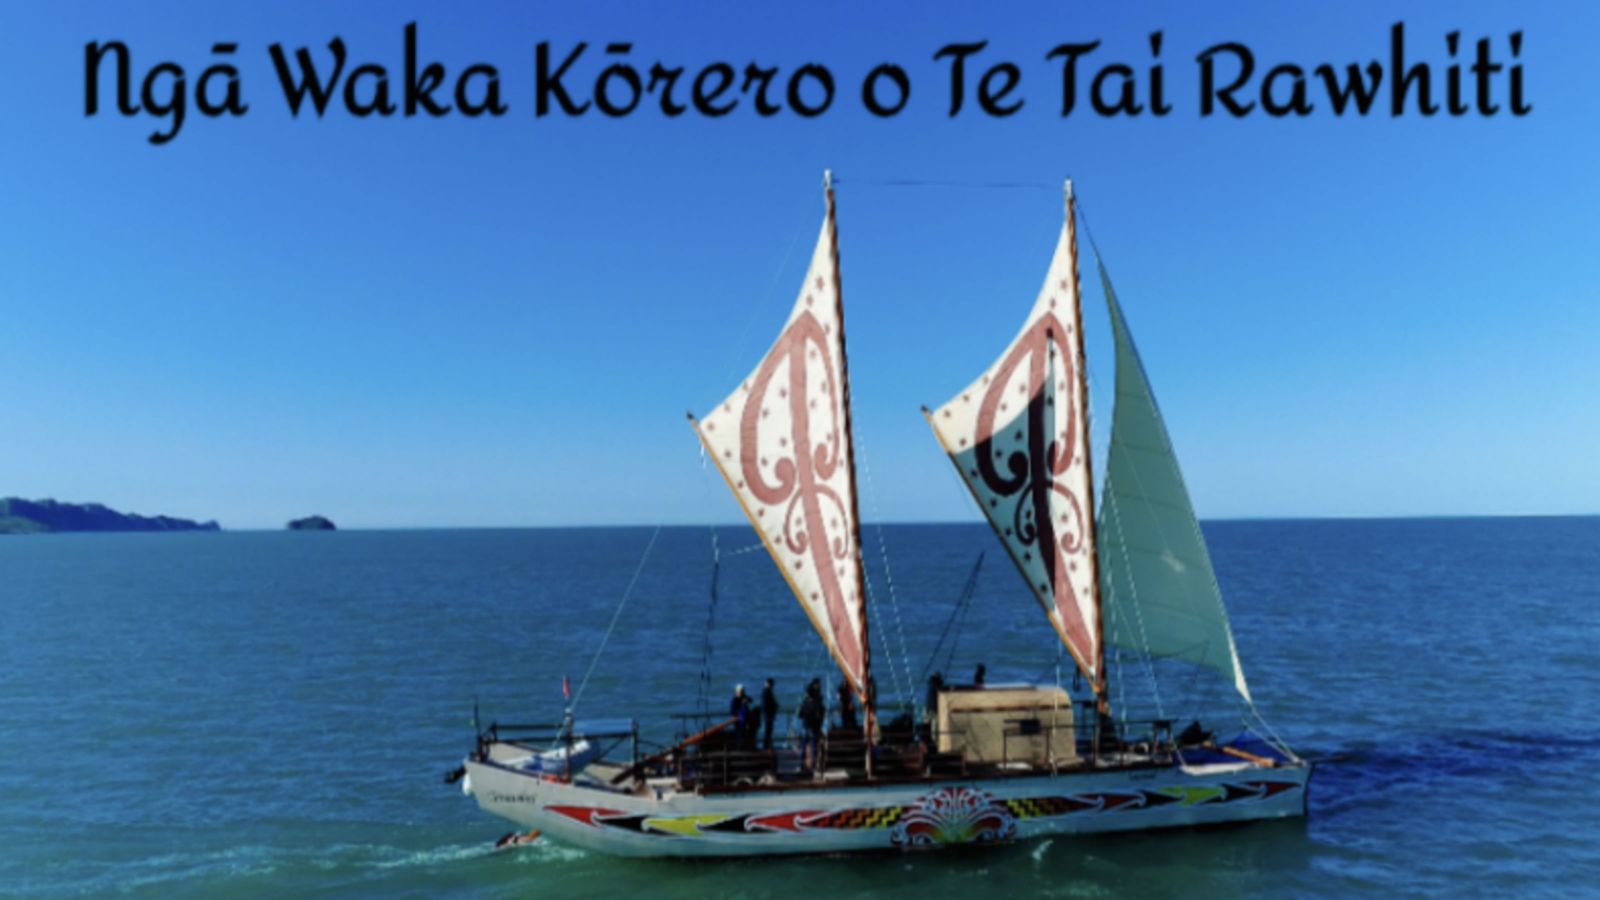 An image of a sail boat with two inverted triangle sails and a jib, sailing on calm waters under a blue sky, text reads, Ngā Waka Korerō Te Tai Rawhiti.